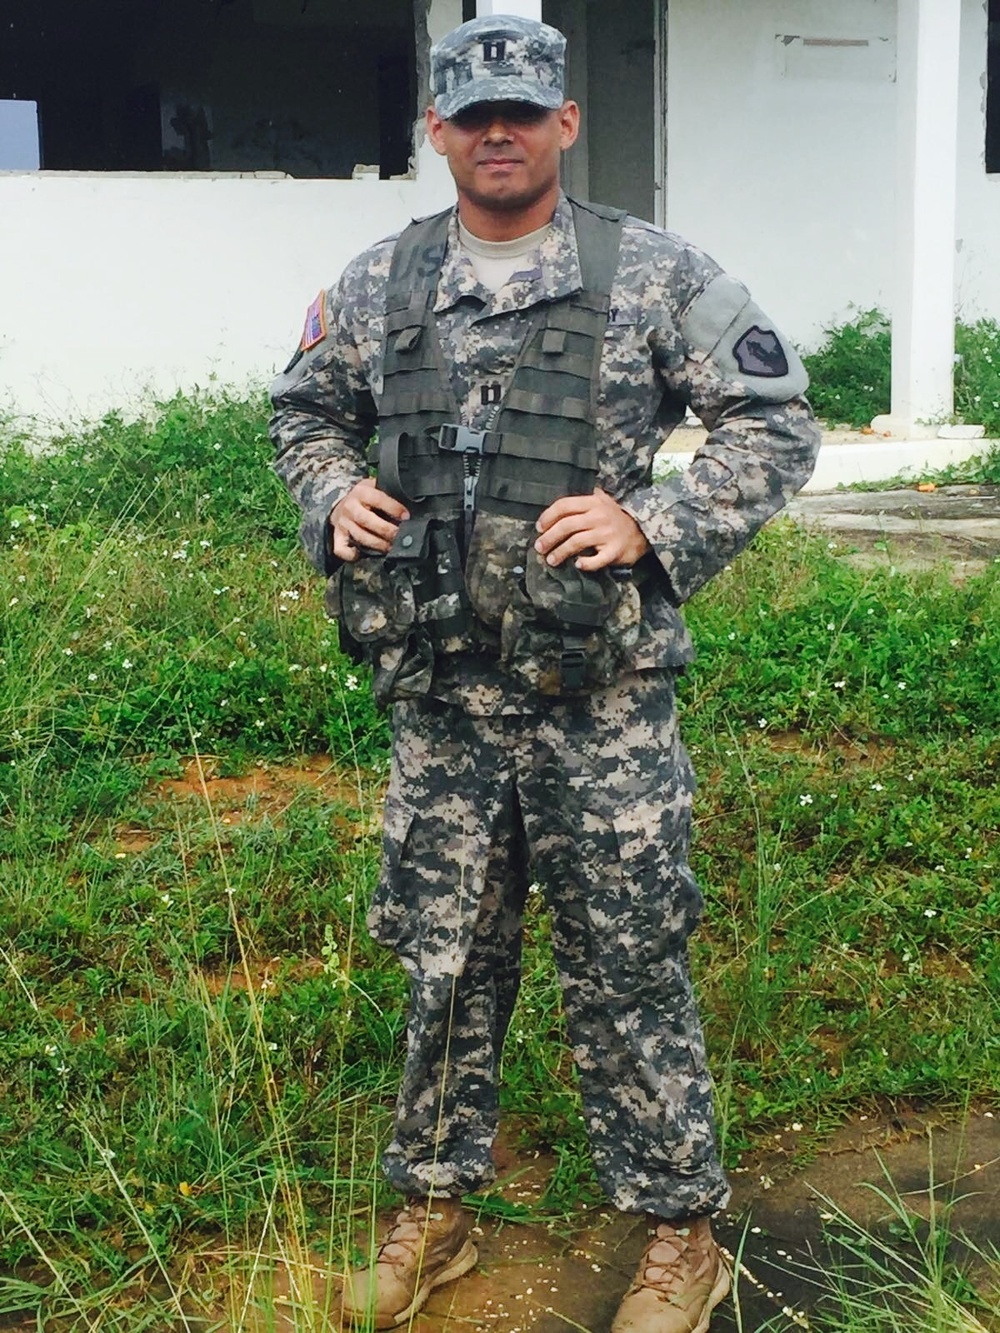 U.S. Army Reserve Captain fulfills his dream